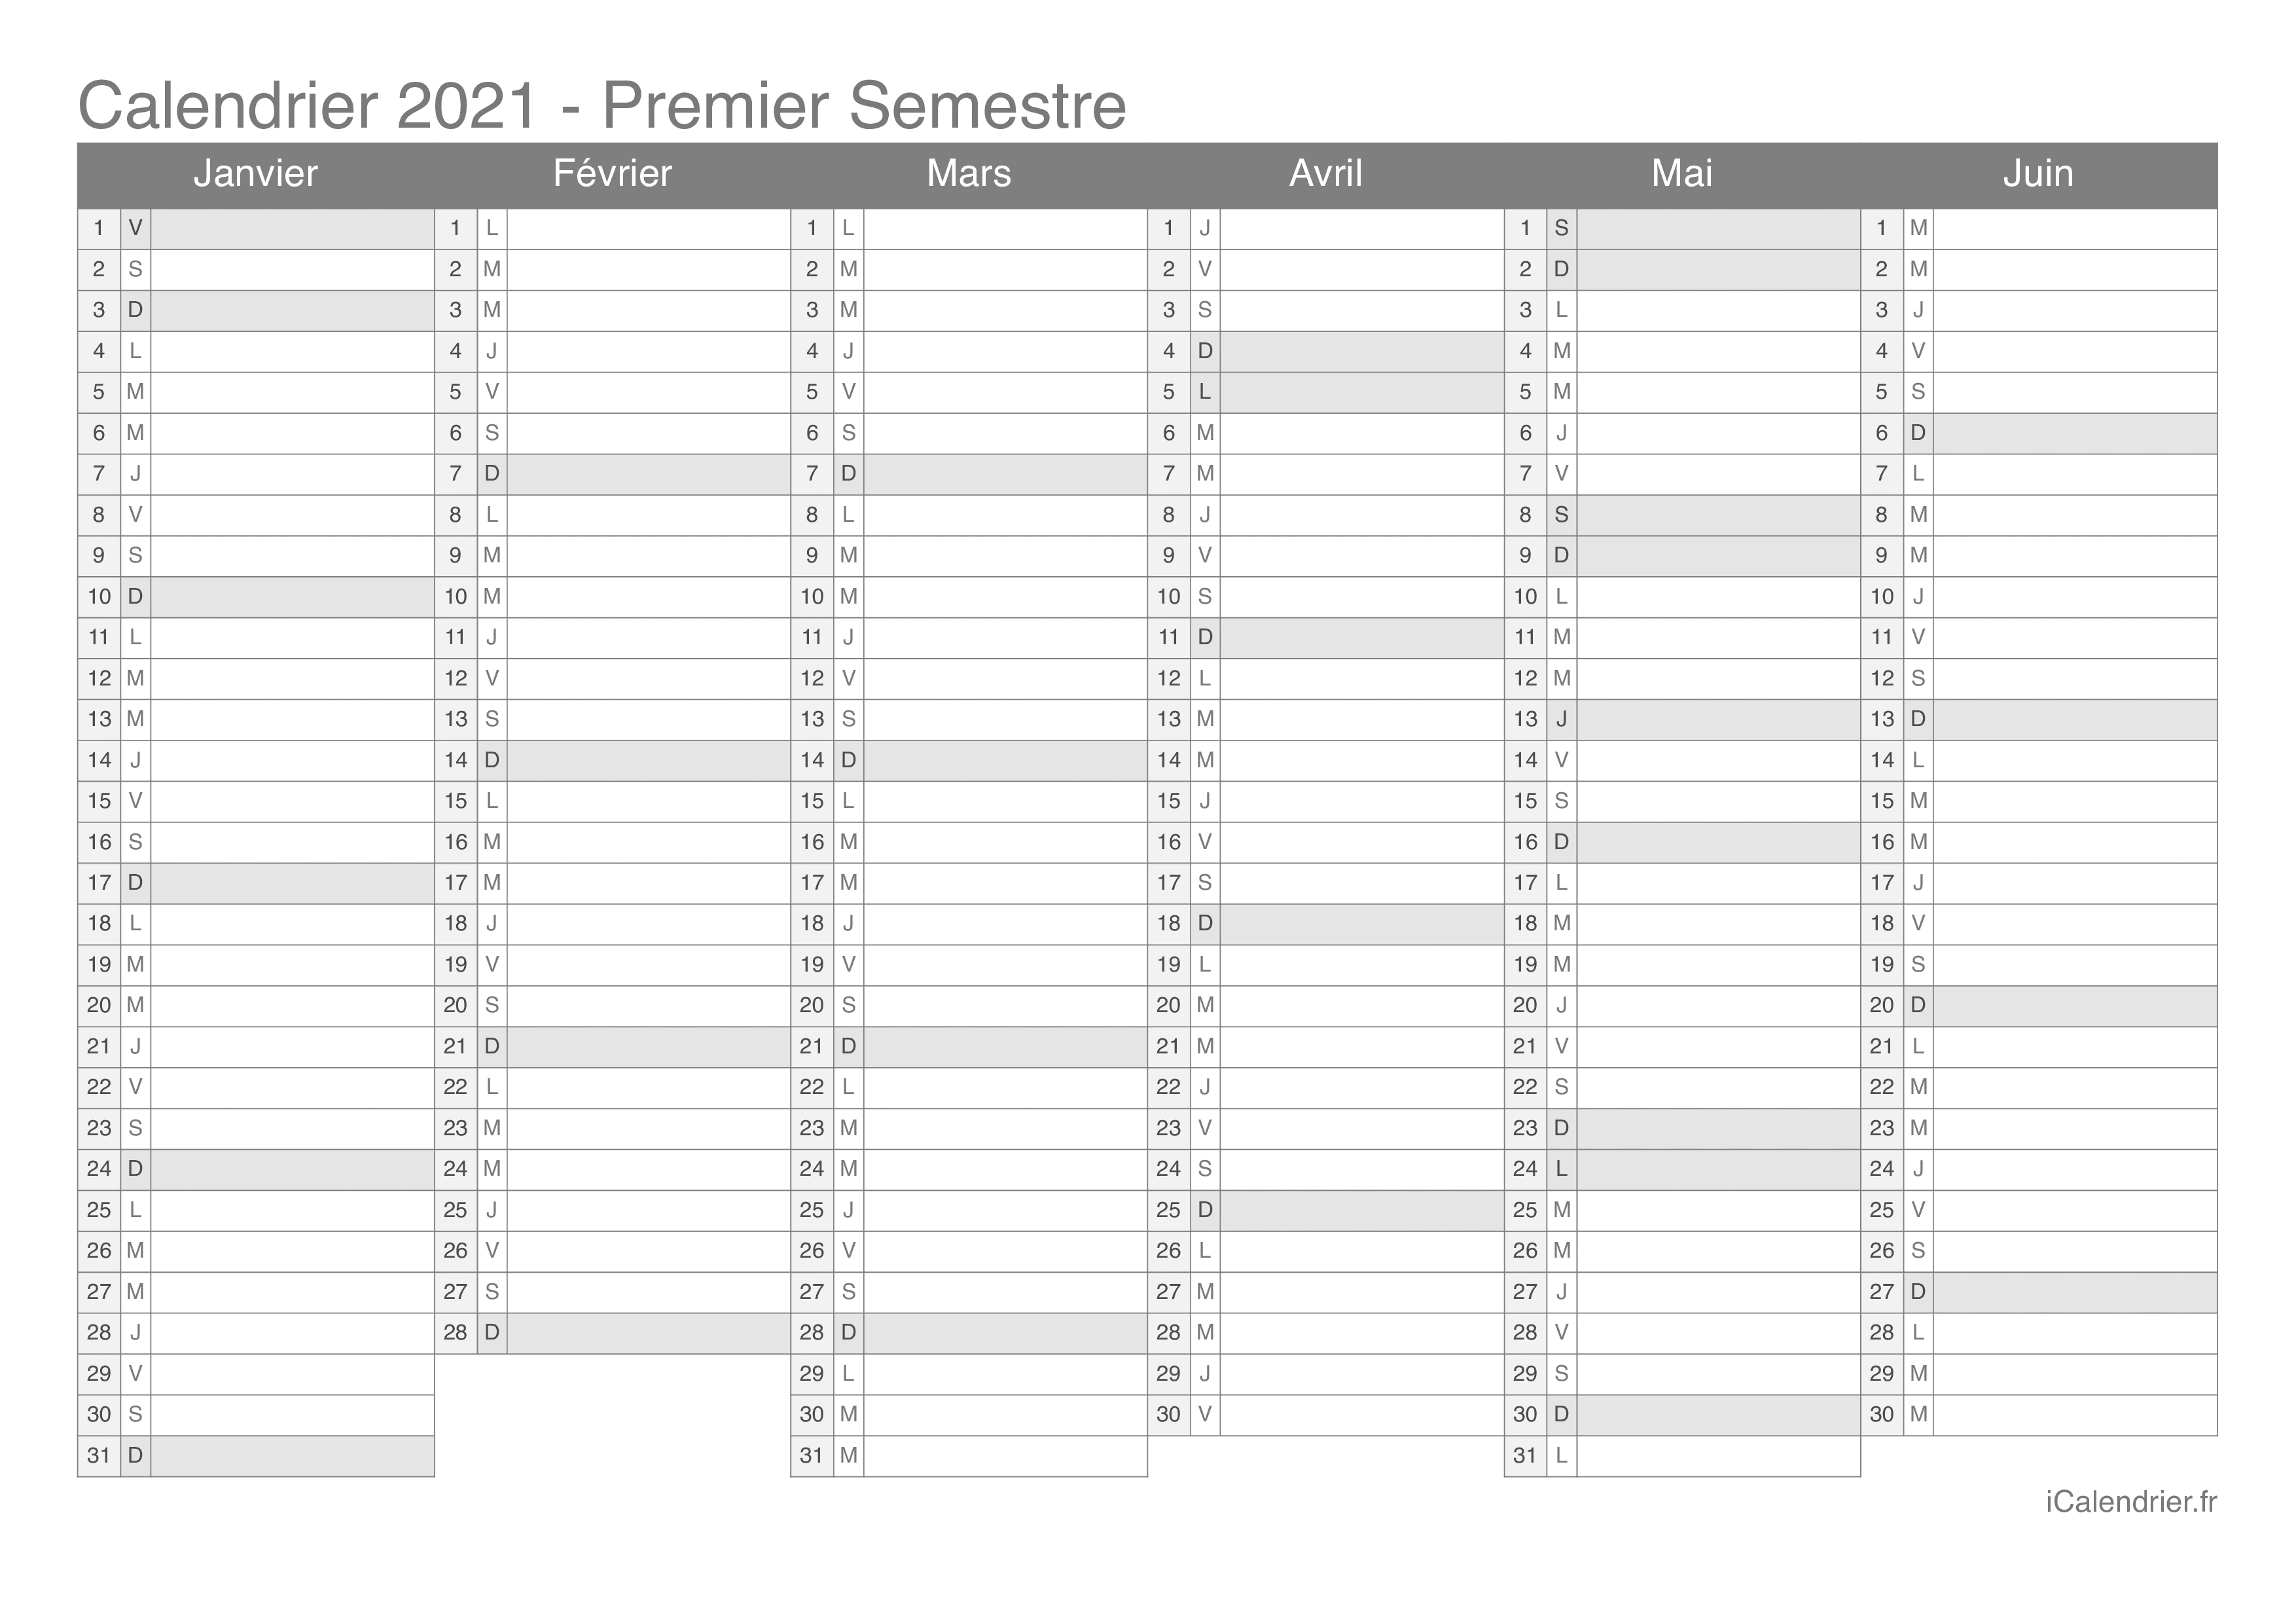 Calendrier 2021 Format Excel Calendrier 2021 à imprimer PDF et Excel   iCalendrier